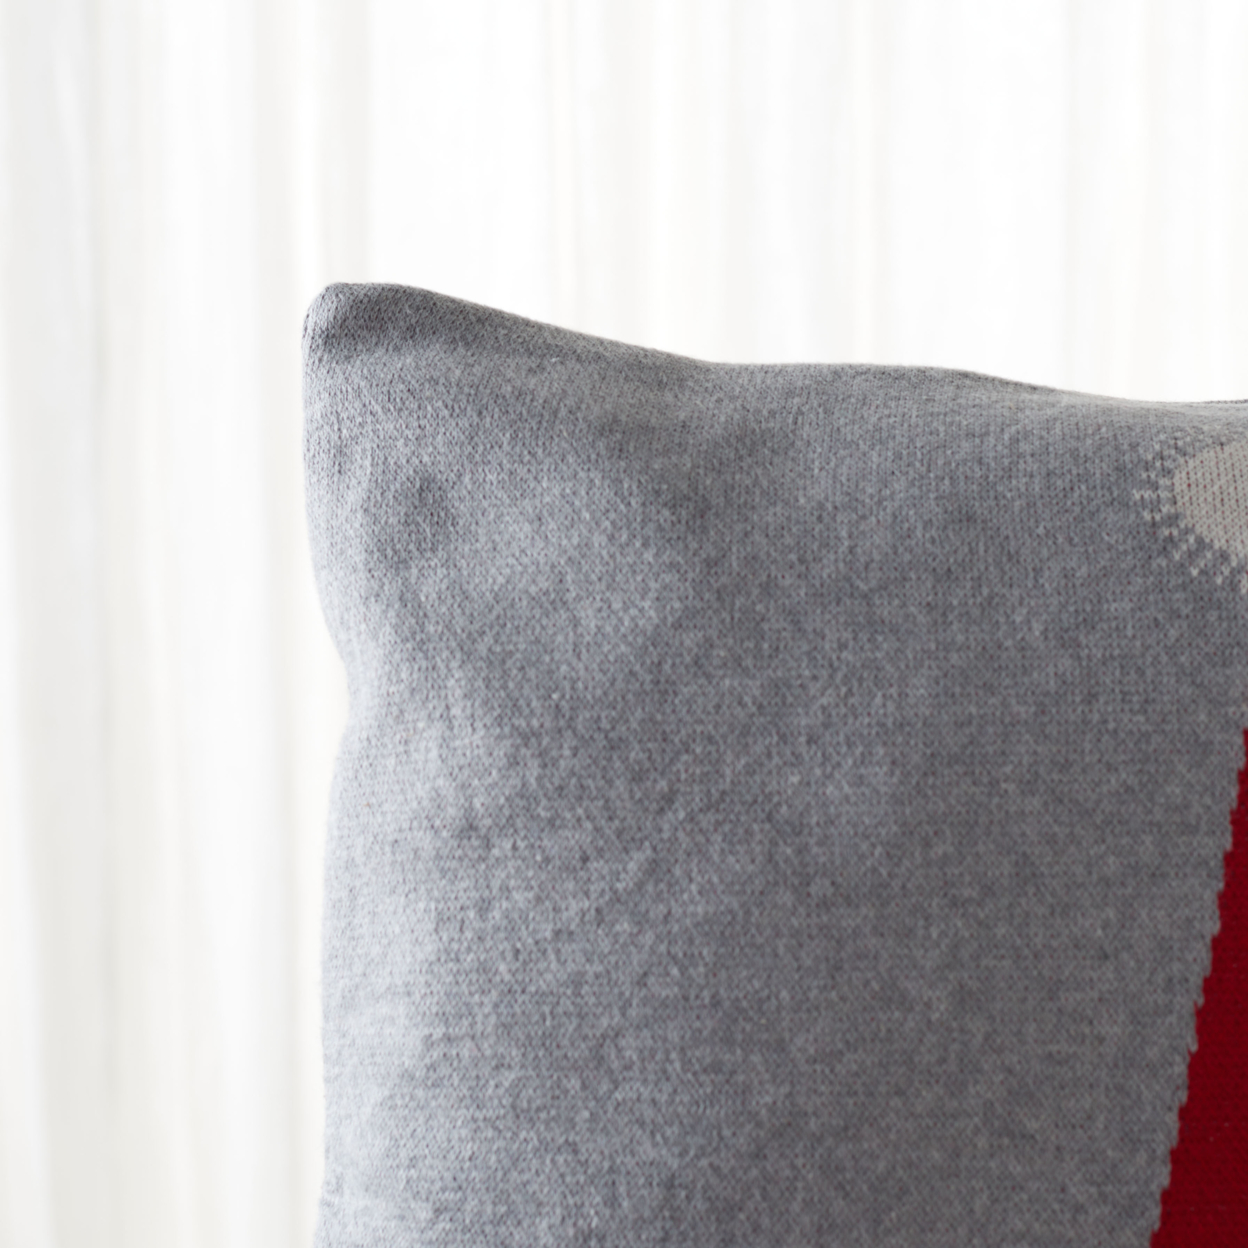 SAFAVIEH Sugarplum Elf Pillow Grey / Red